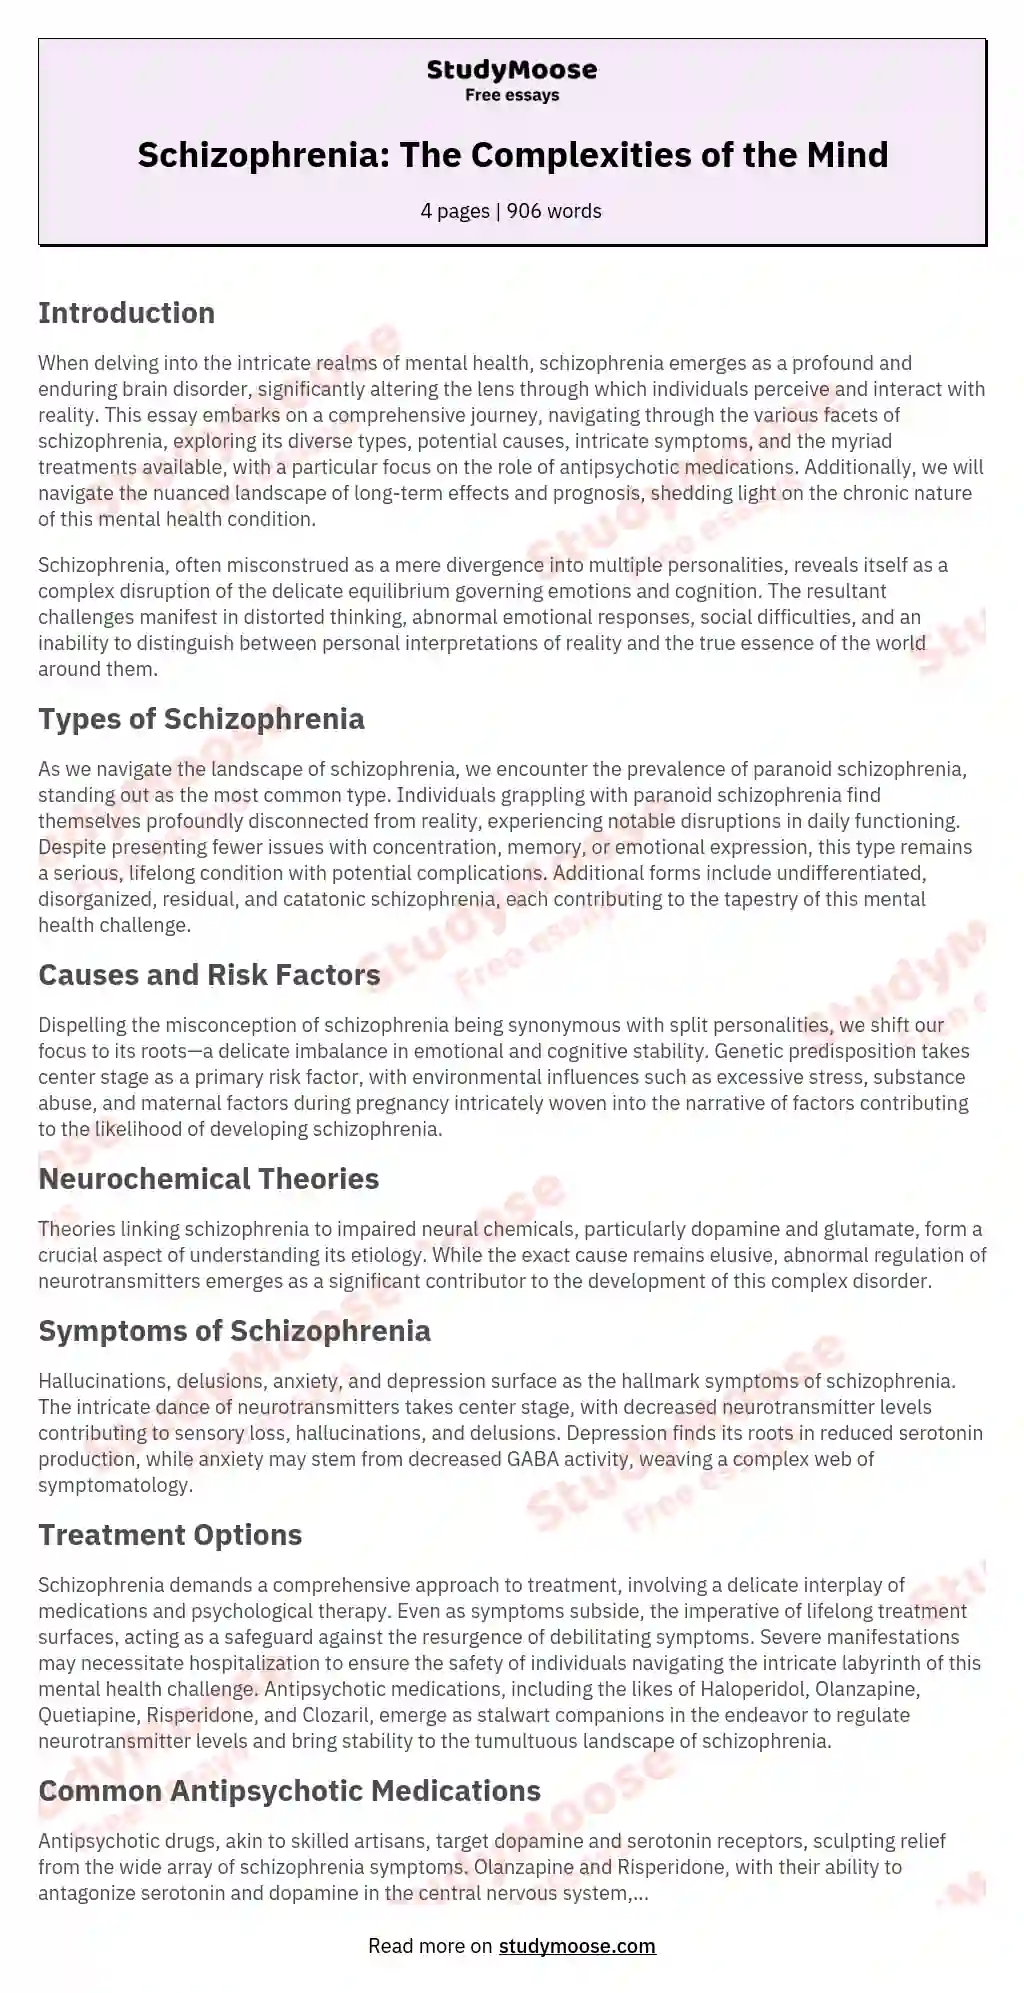 thesis statement about schizophrenia